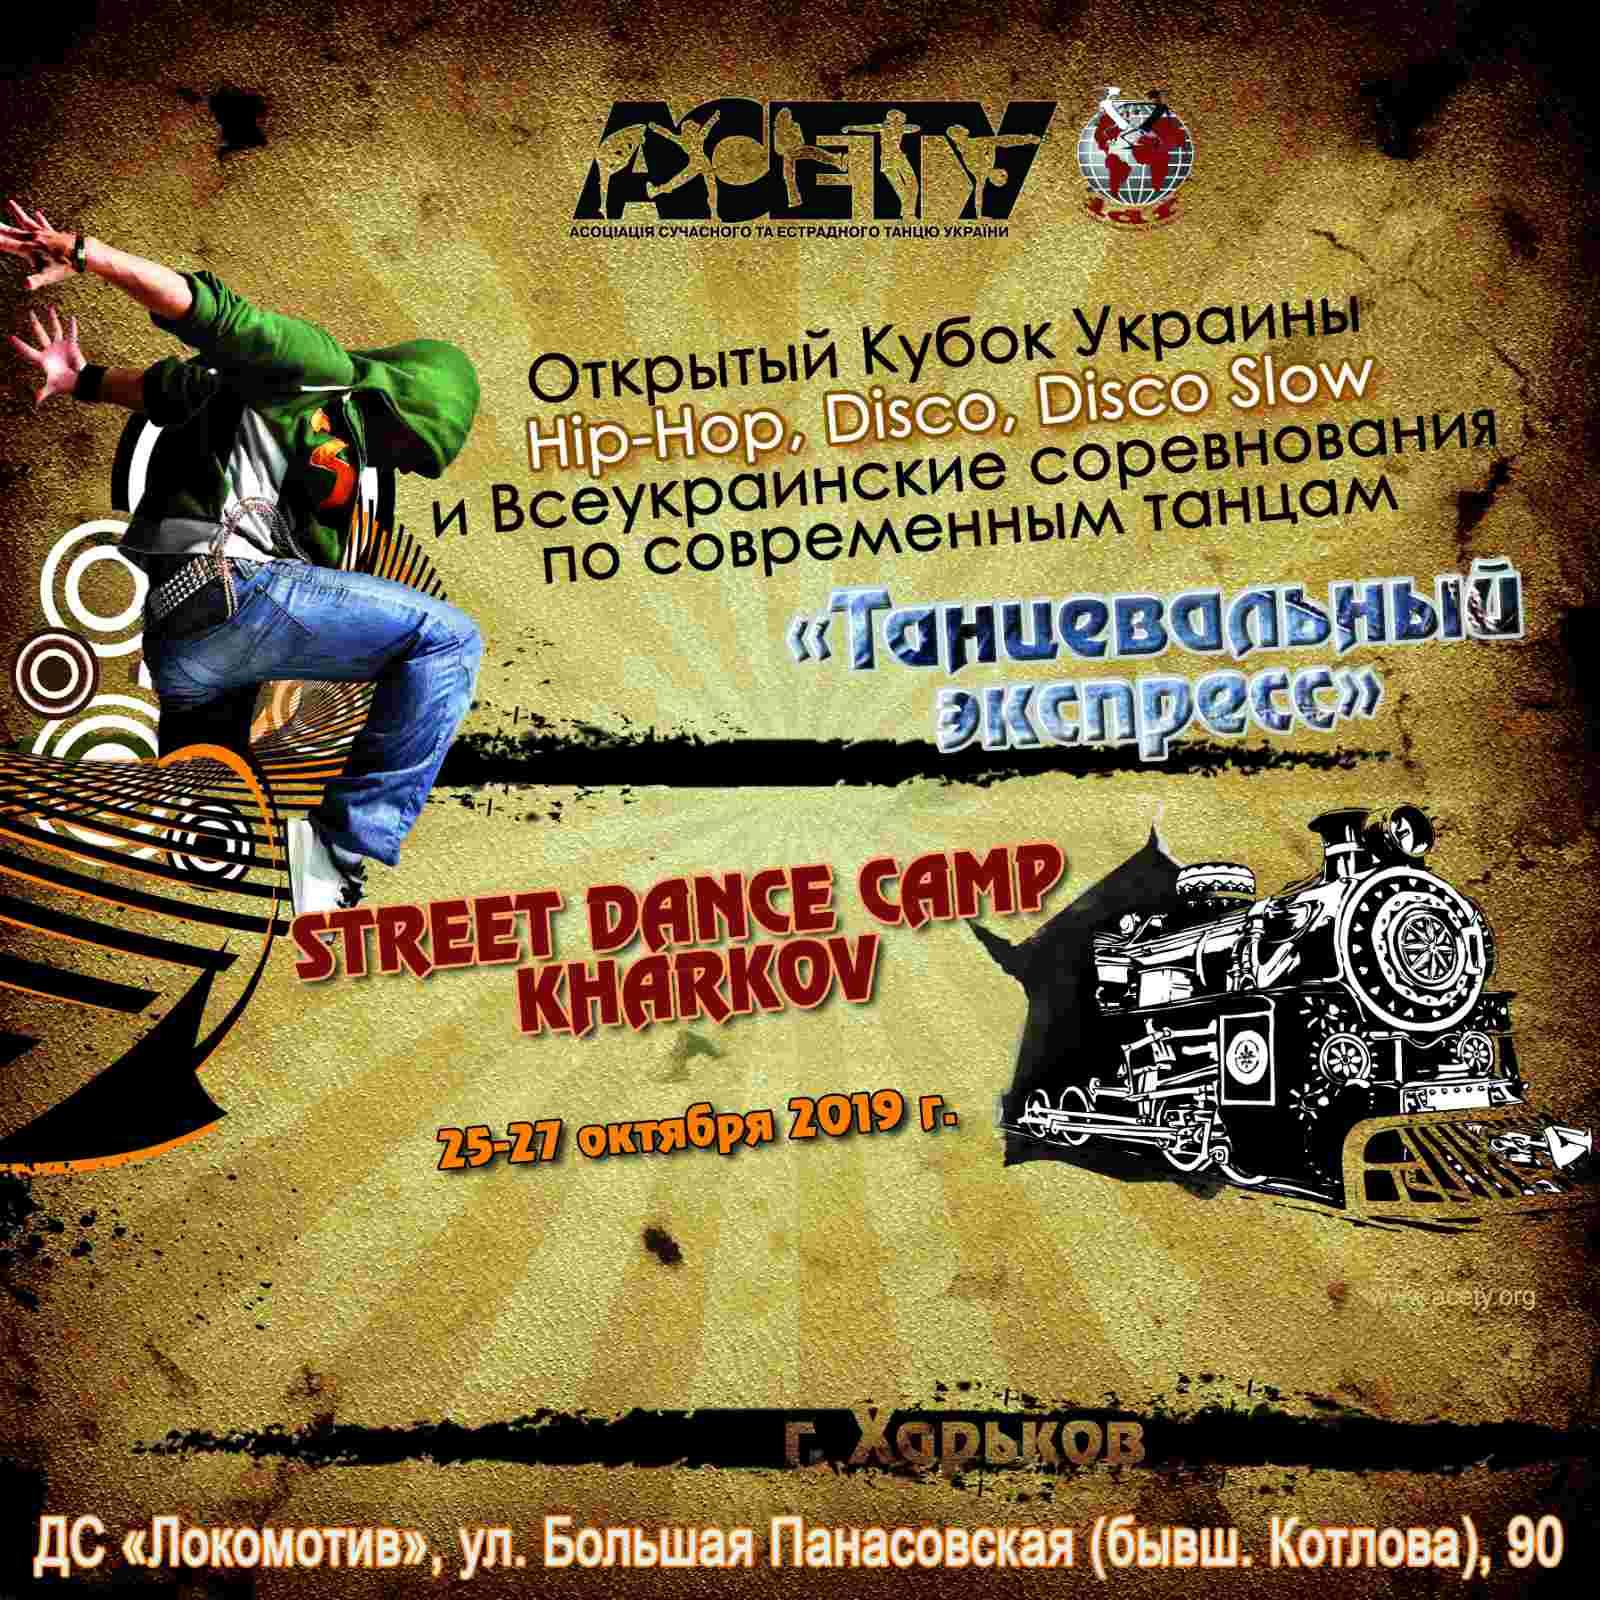 Street Dance Camp Kharkov, 25-27 октября 2019